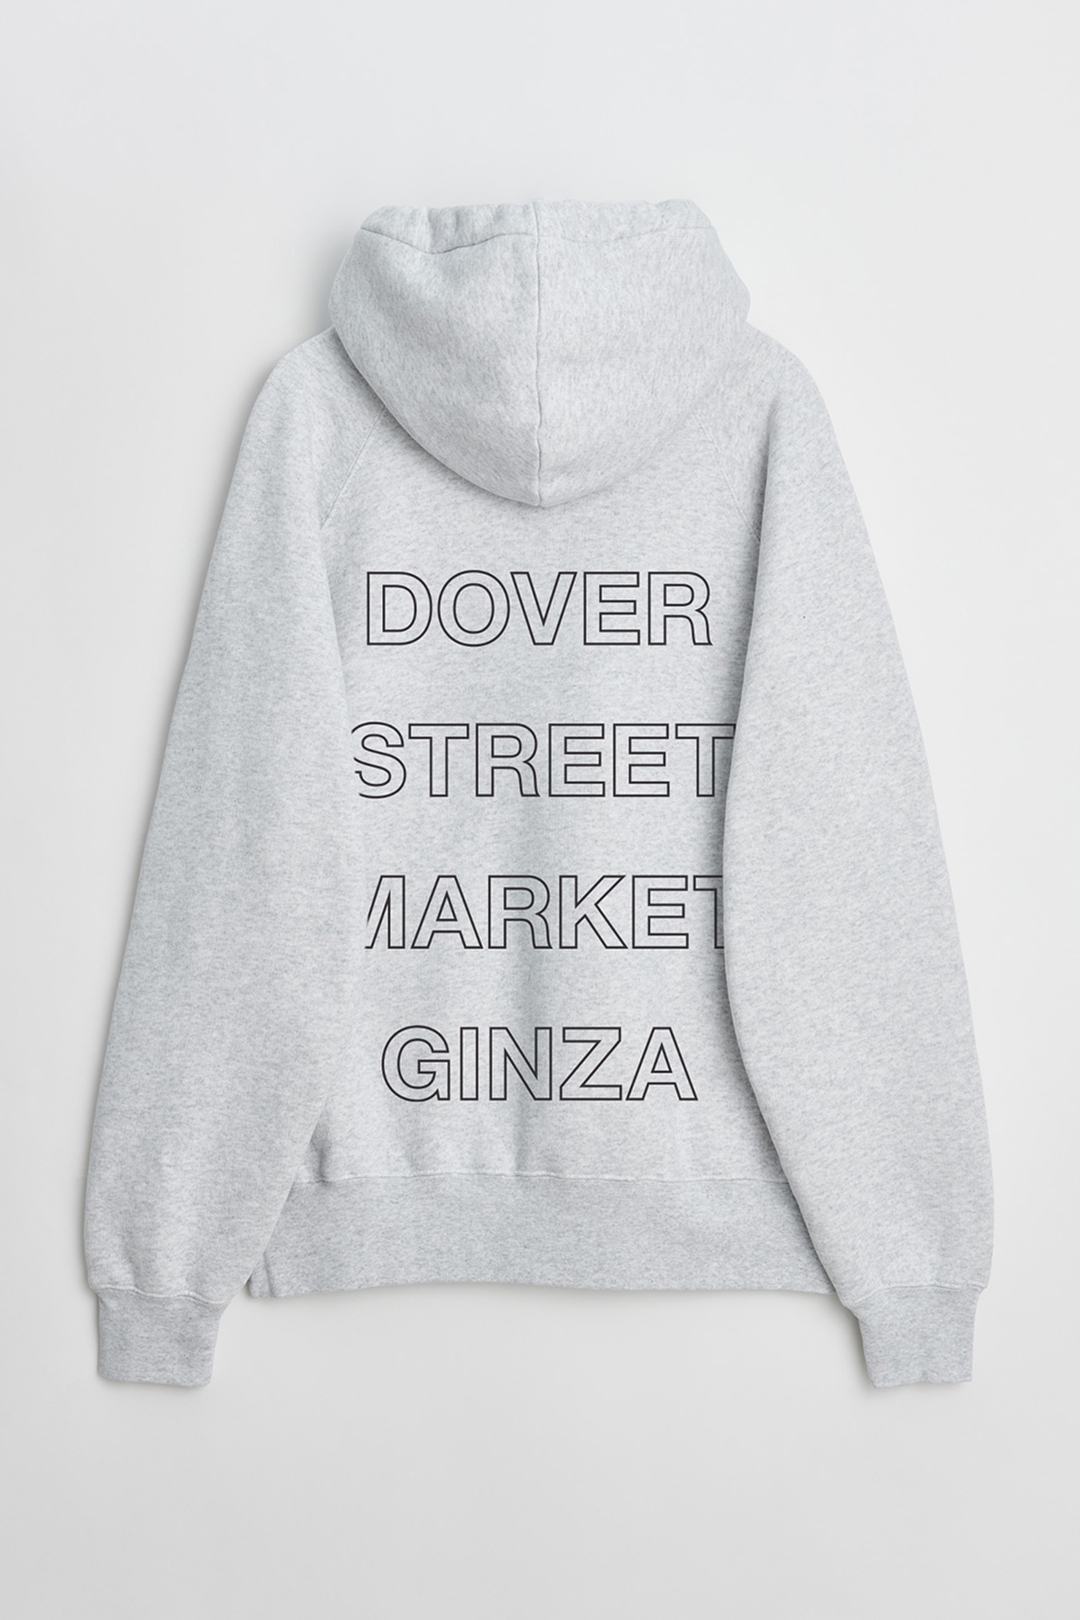 DOVER STREET MARKET GINZA 10周年記念アイテムが10/29 発売！COMME des GARÇONS、sacai、STUSSY、Virgil Abloh/LOUIS VUITTONなどが勢揃い (DSMG ドーバーストリートマーケット)